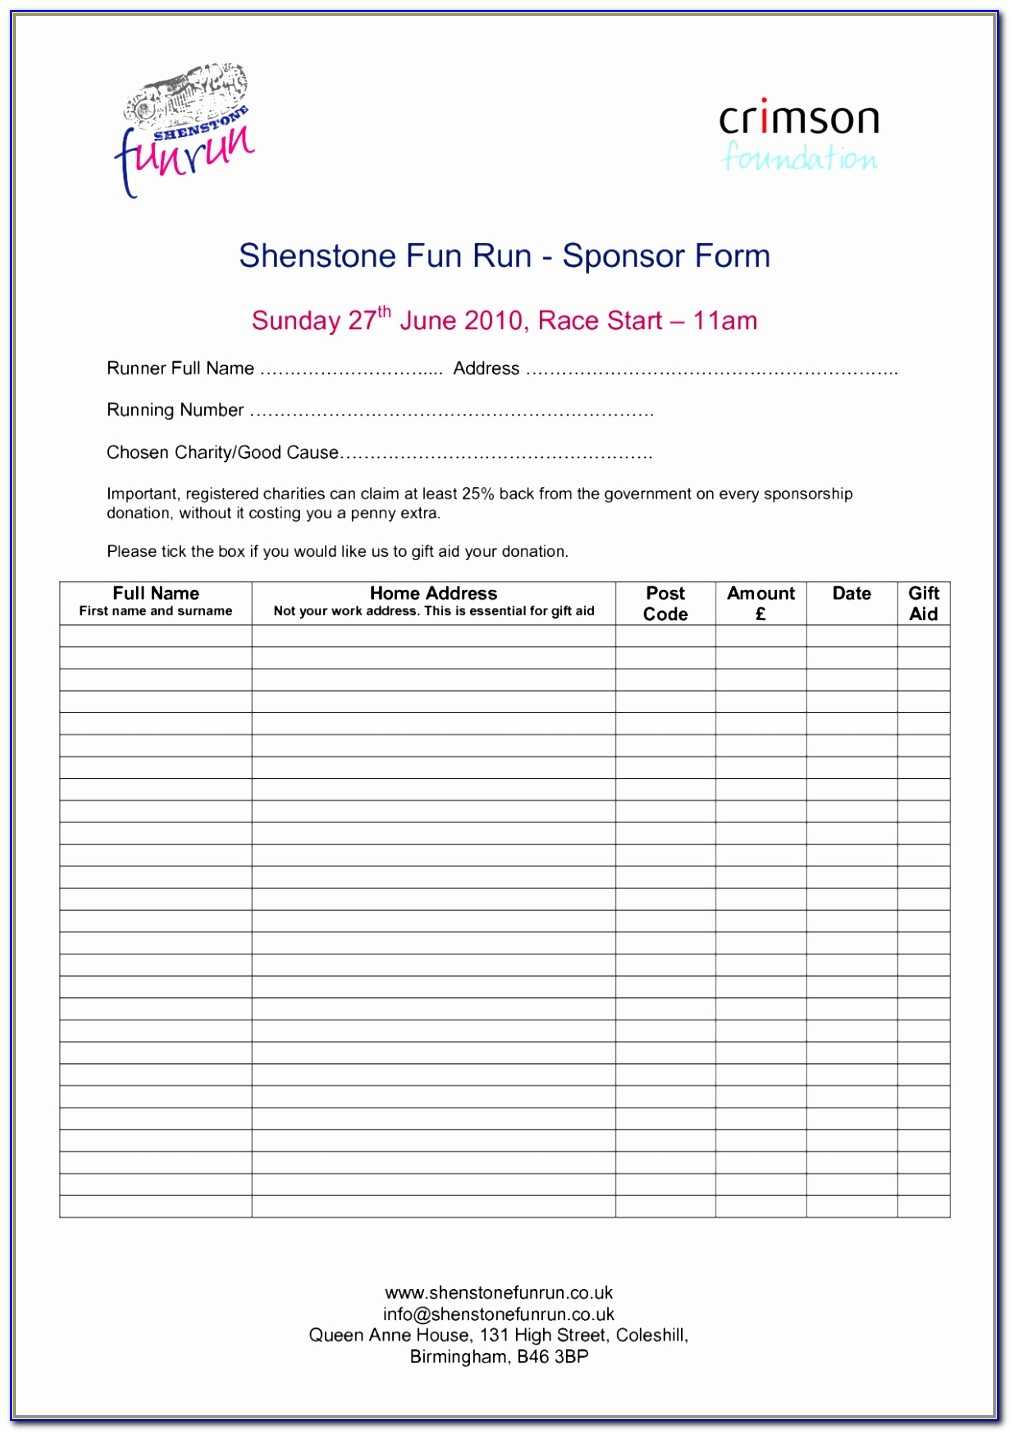 Sample Sponsorship Form Informatics Pharmacist Sample Resume Throughout Blank Sponsorship Form Template